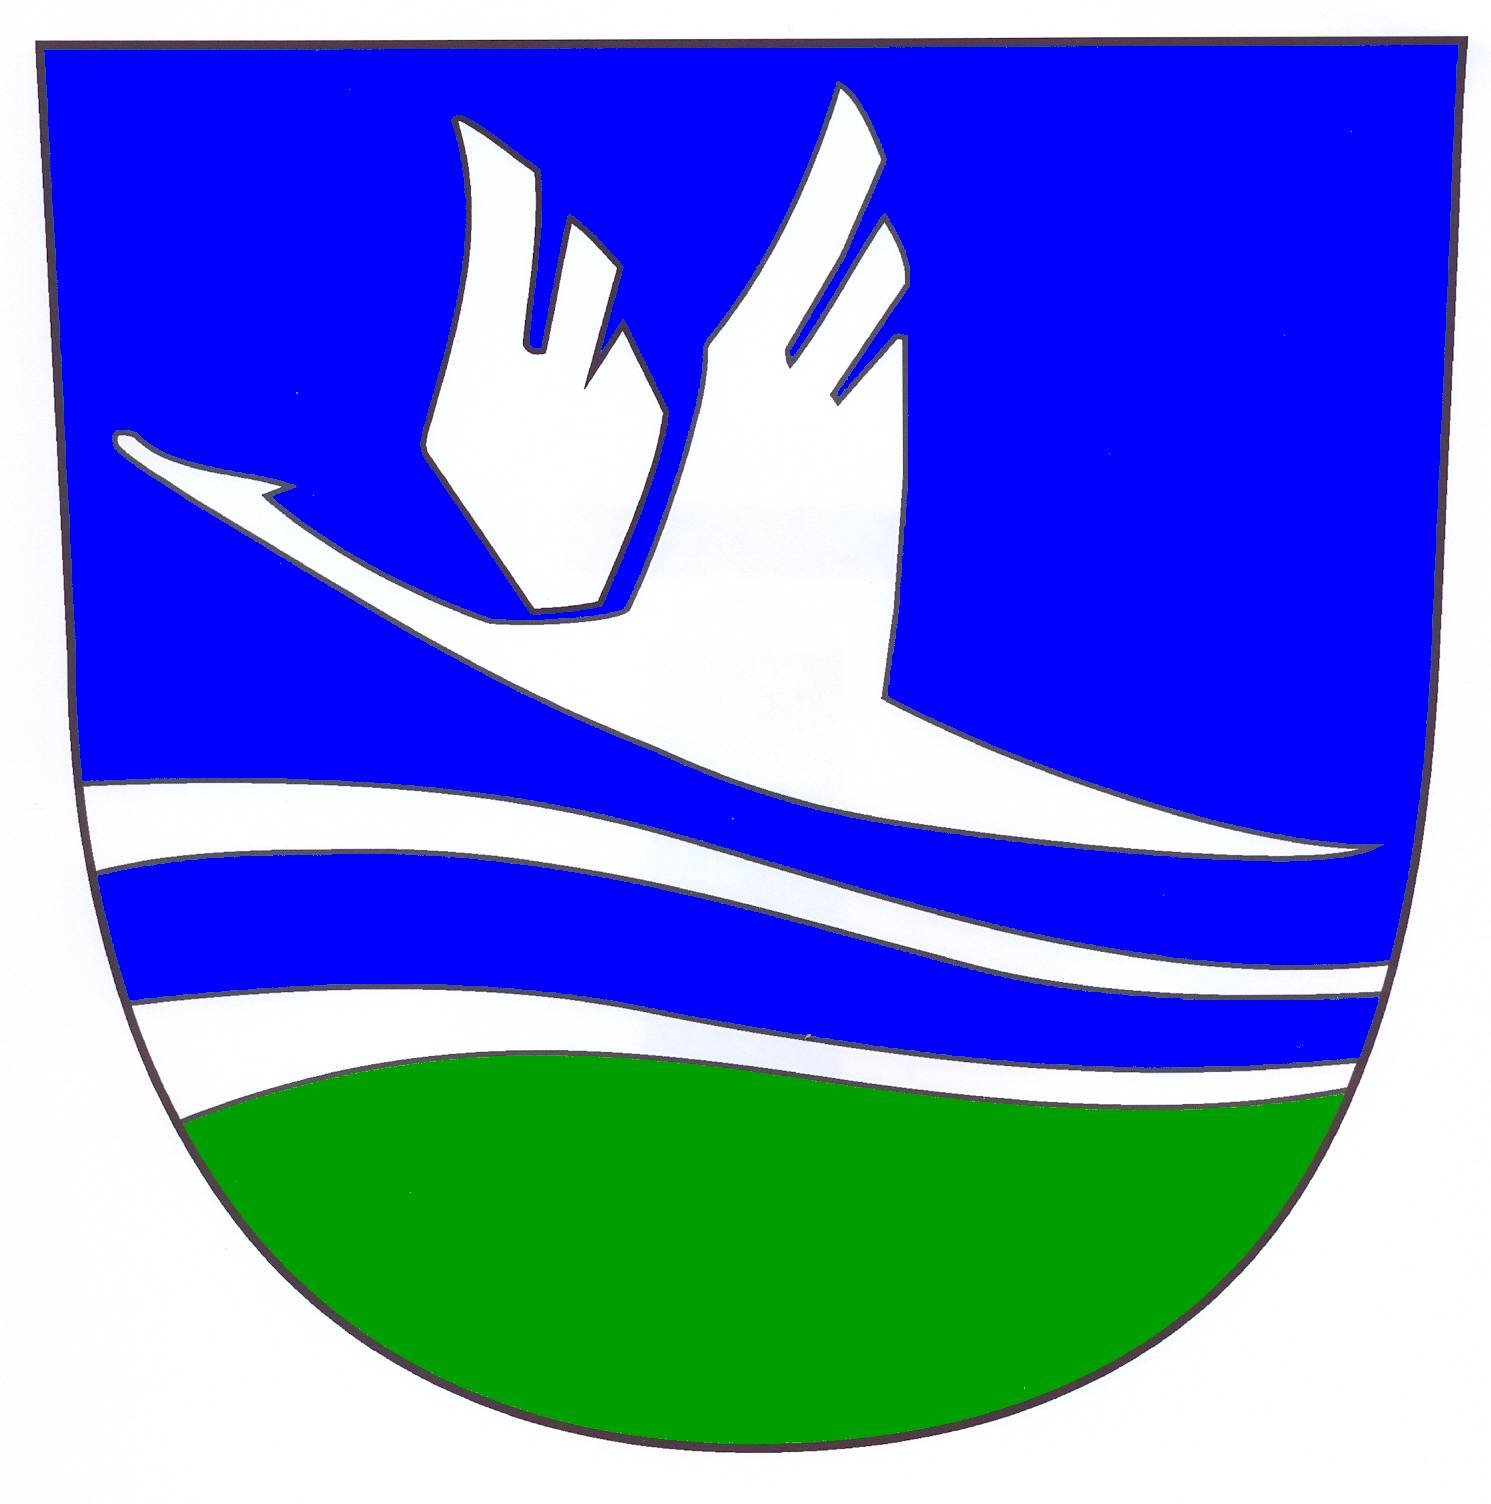 Wappen Amt Lauenburgische Seen, Kreis Herzogtum Lauenburg